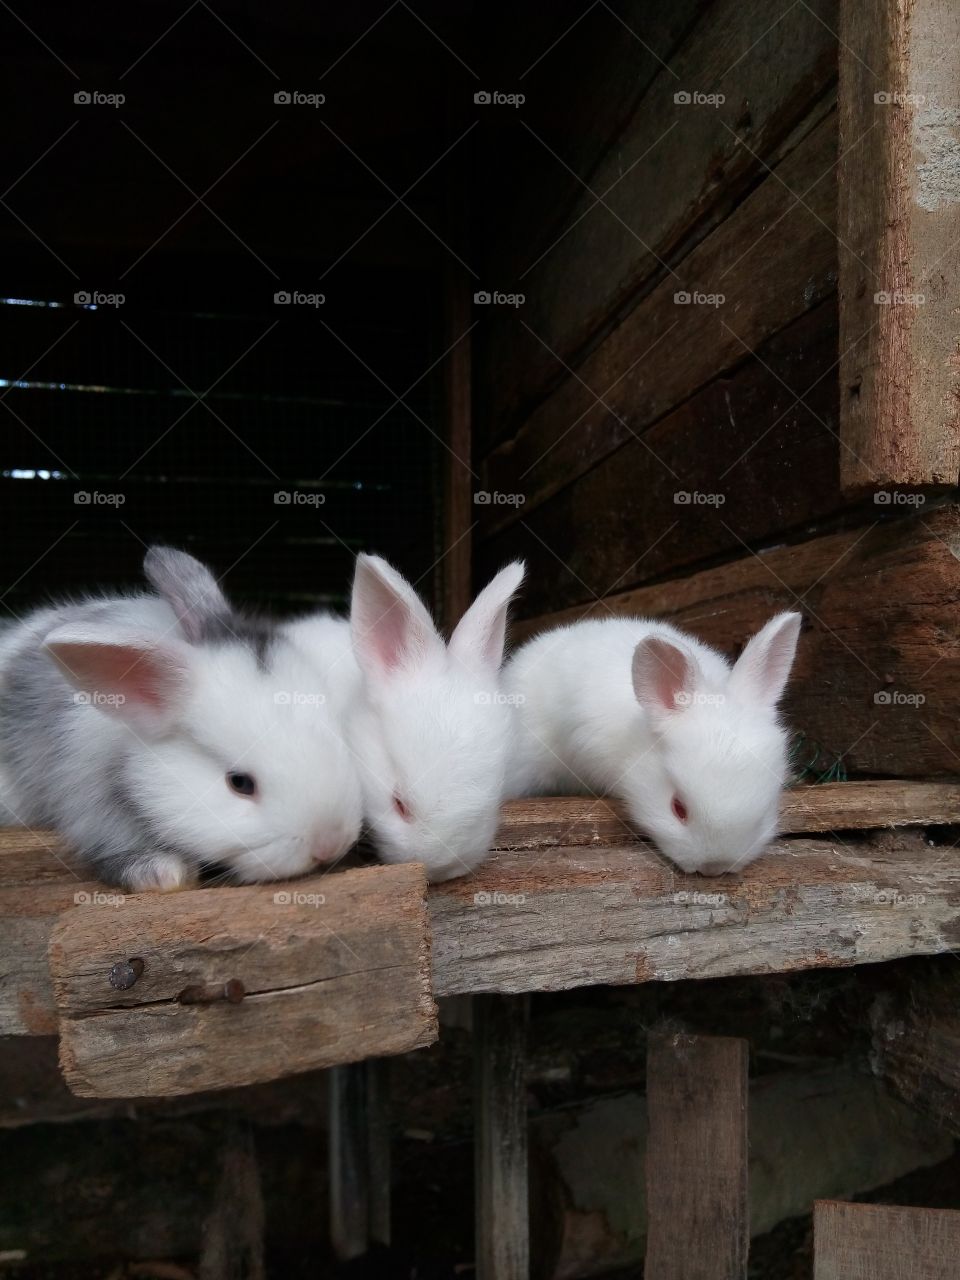 Triple bunny